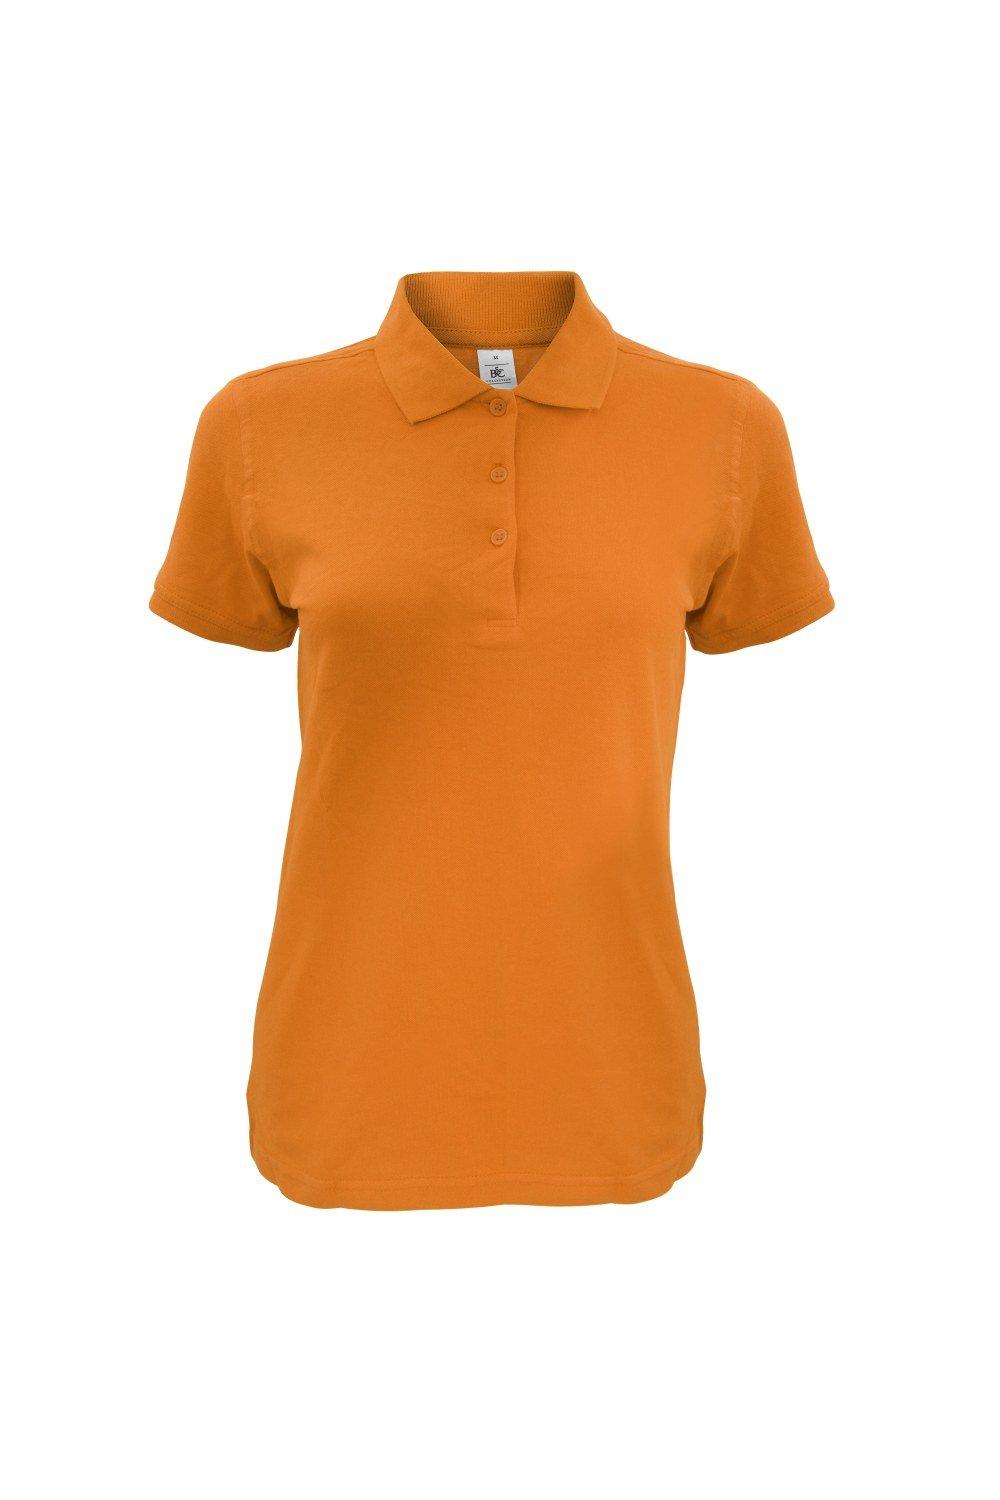 Рубашка-поло Safran Timeless B&C, оранжевый